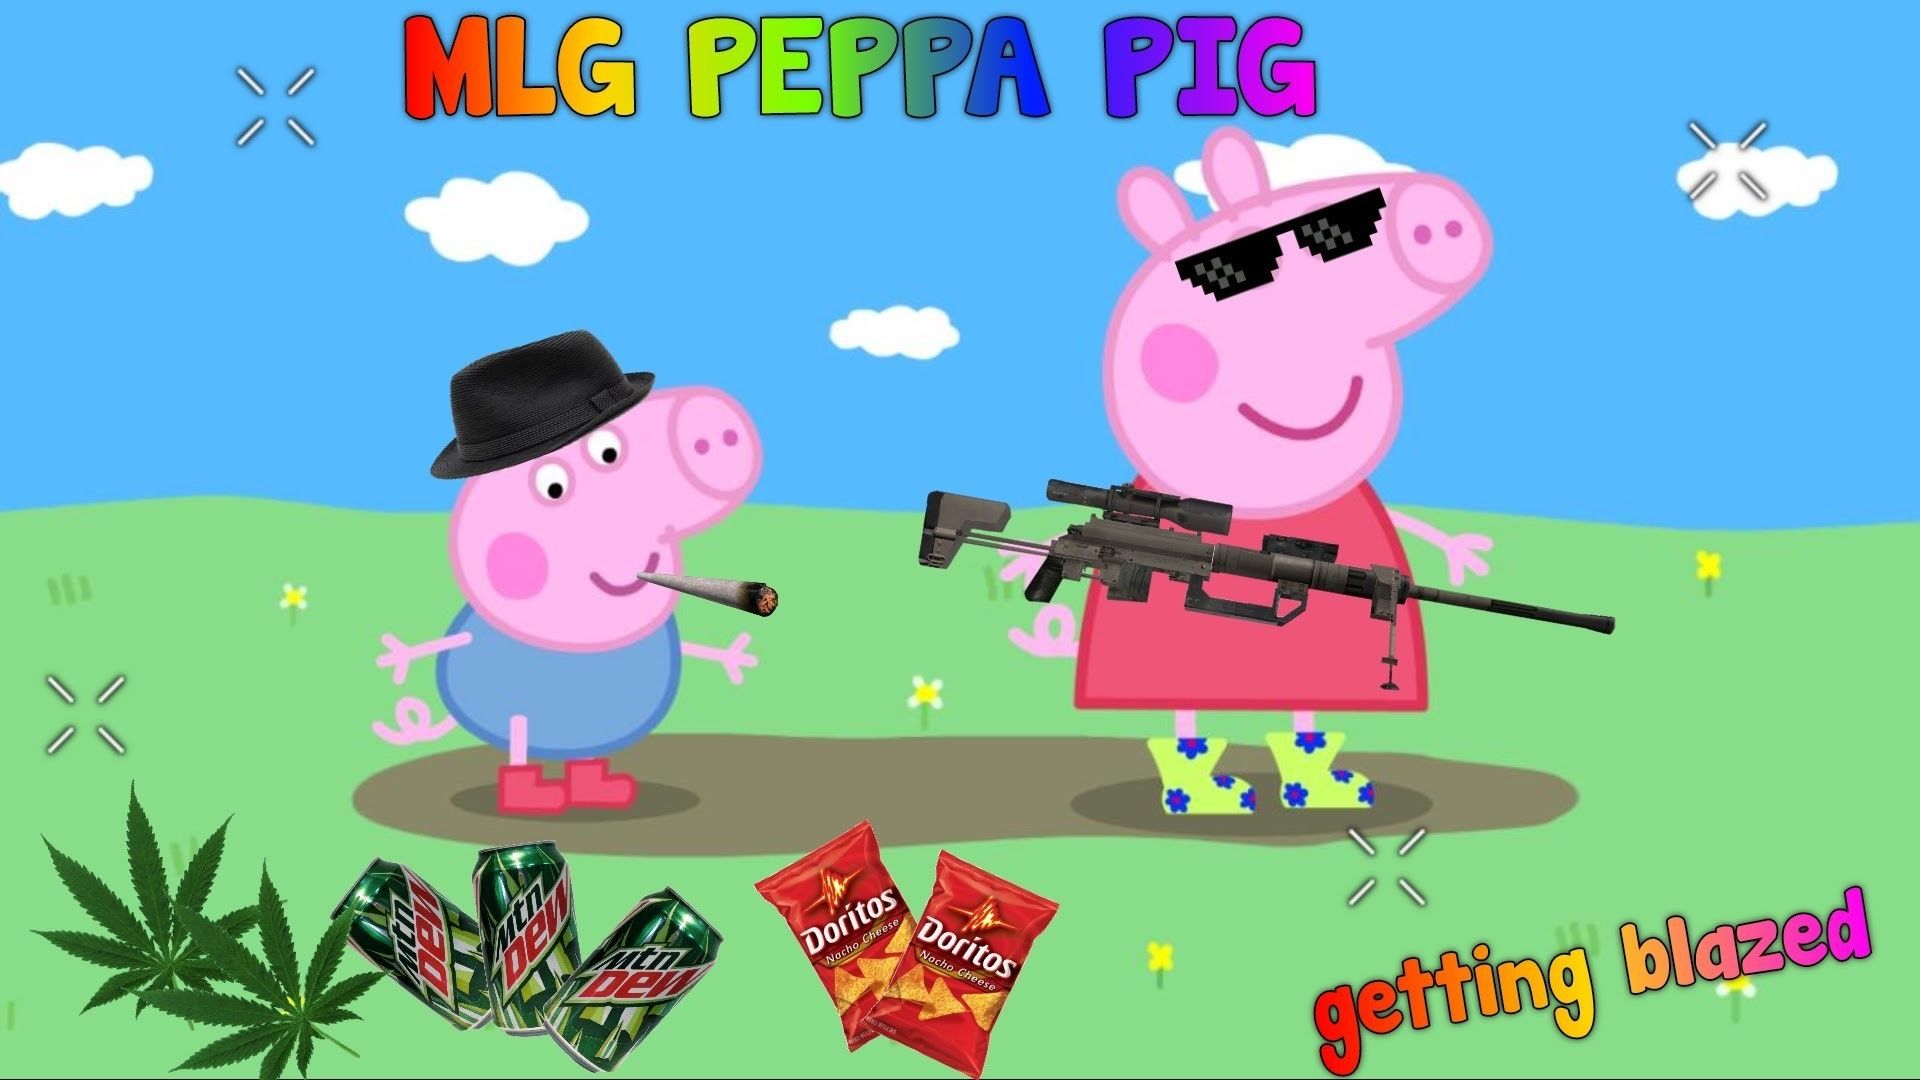 Peppa Pig Meme Wallpapermeme Fuun.blogspot.com